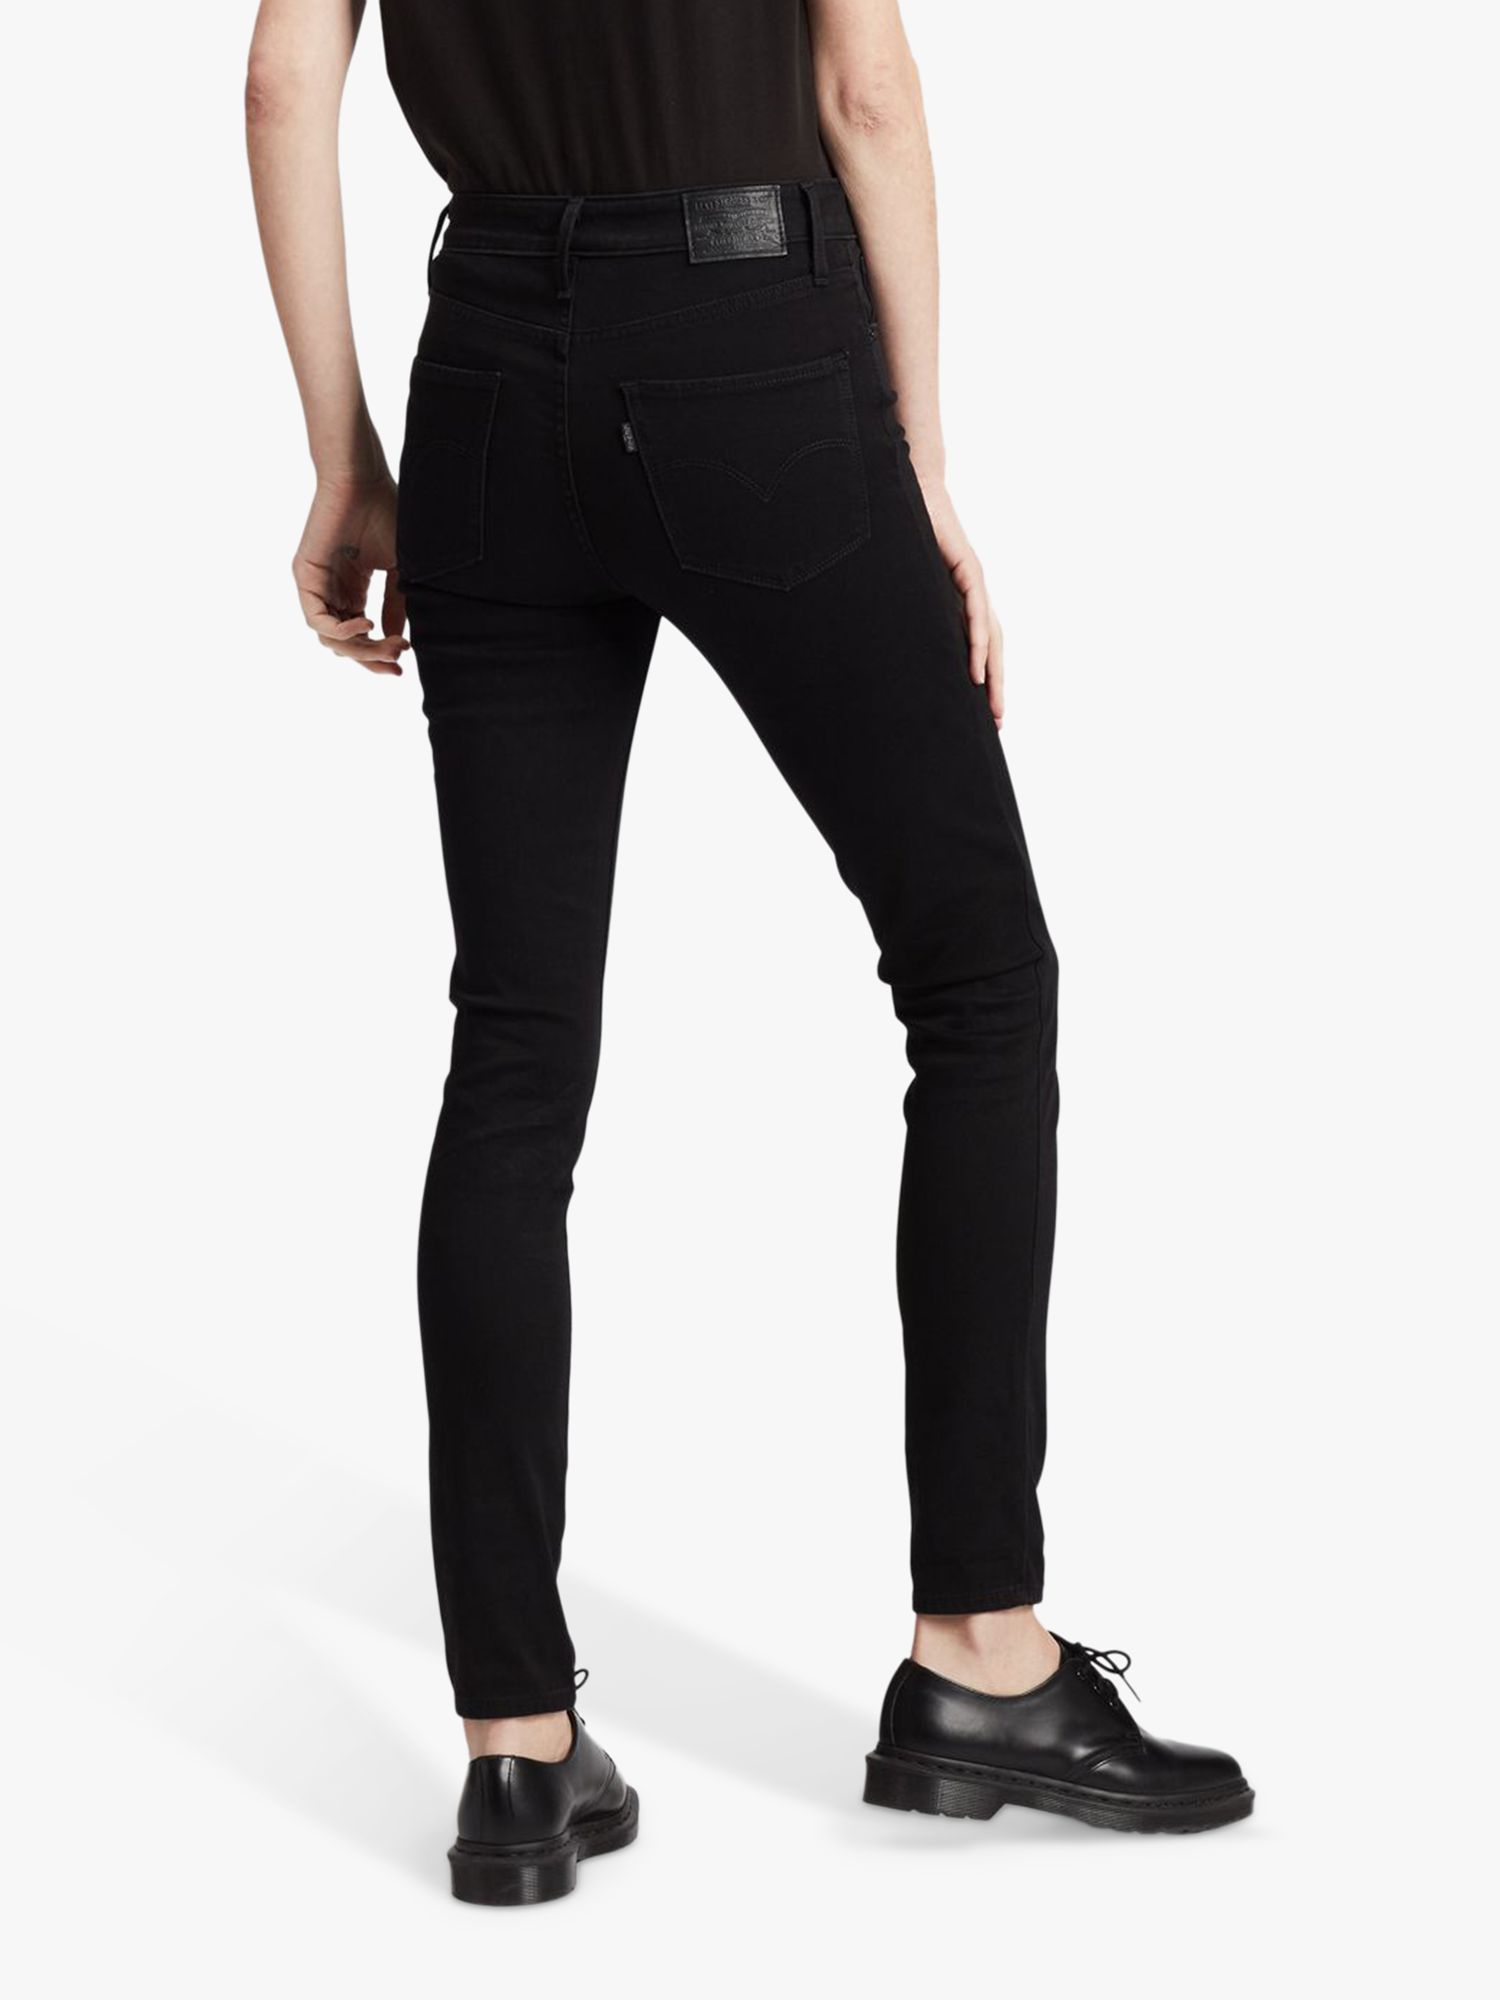 Buy Levi's 721 High Rise Skinny Jeans, Long Shot Black Online at johnlewis.com